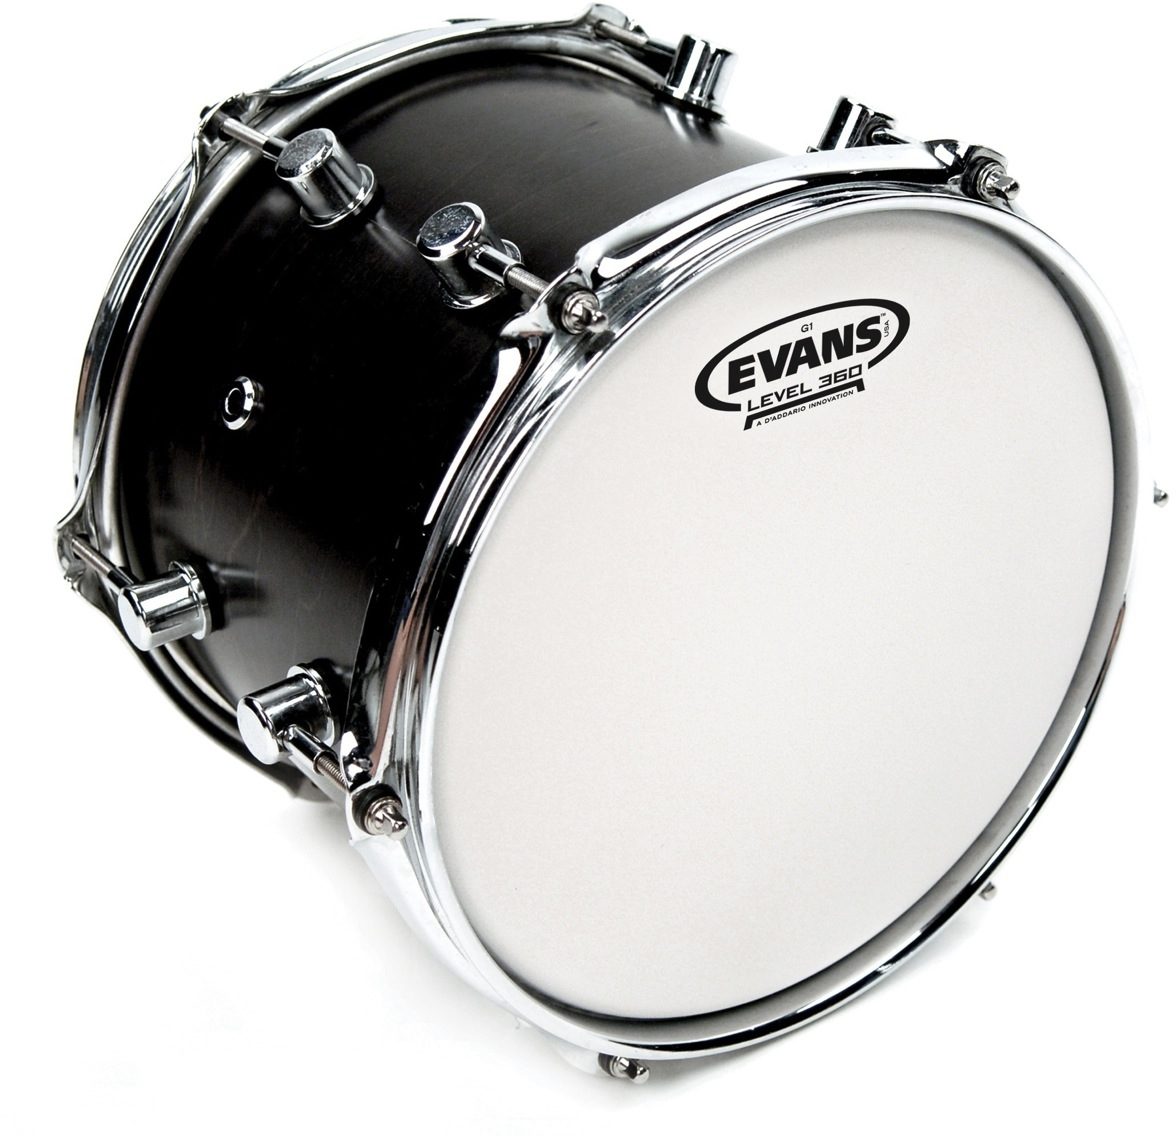 Evans Genera G1 13-inch Tom B13G1 Snare Drum Head 